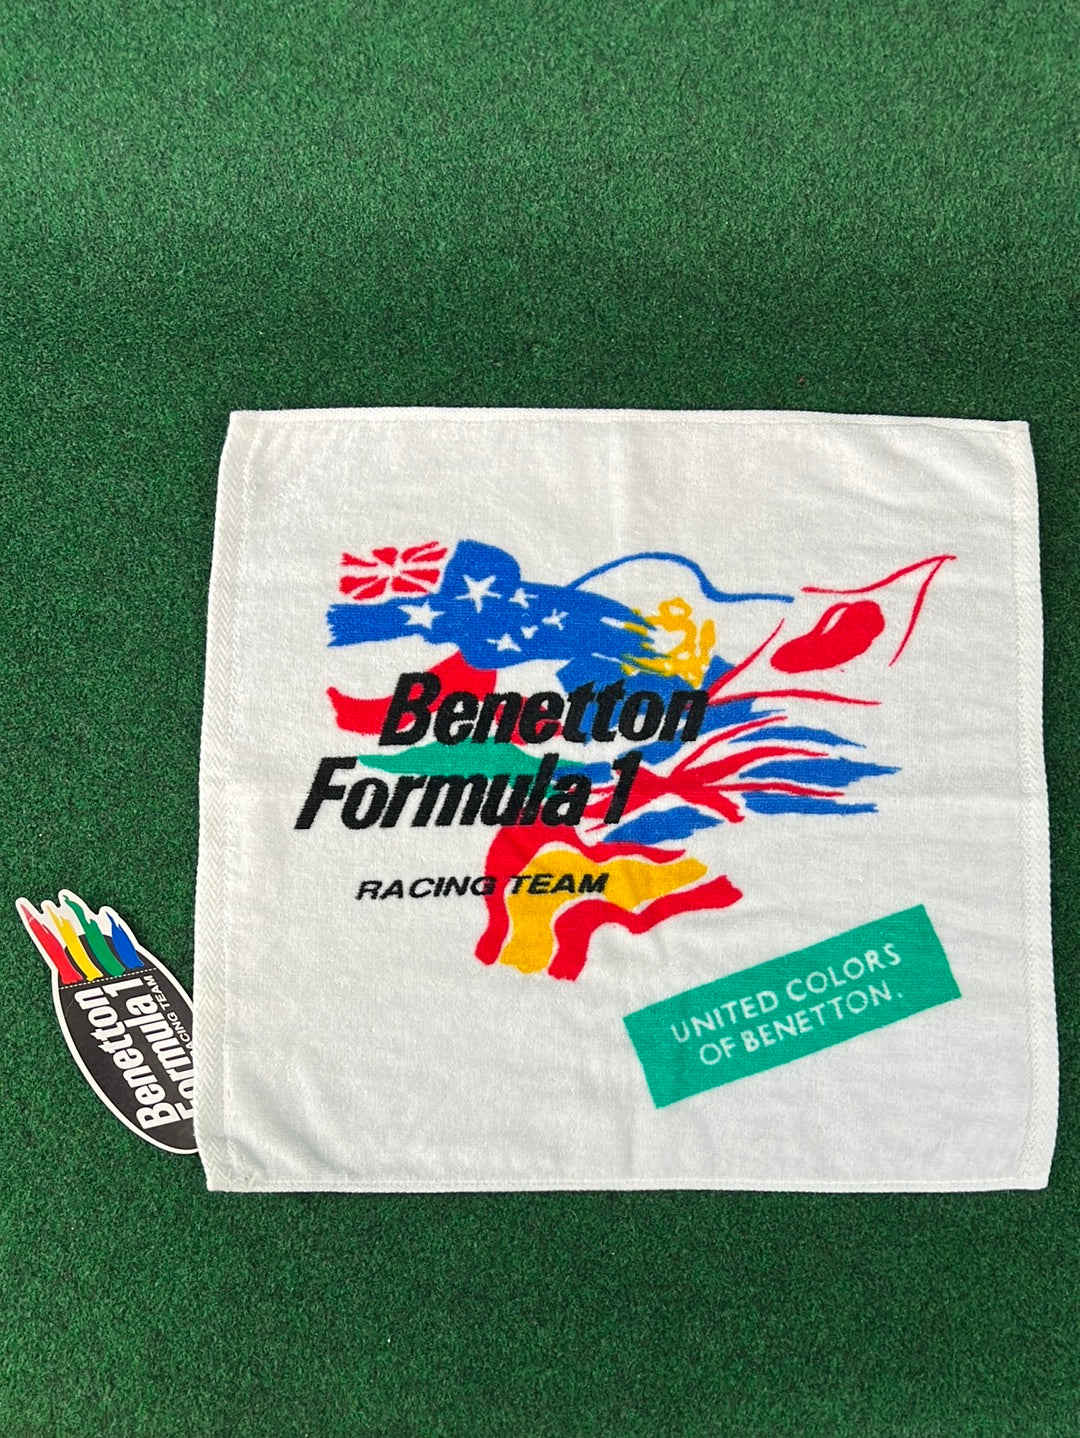 Benetton Formula Racing Team Hand Towel w/ Tag